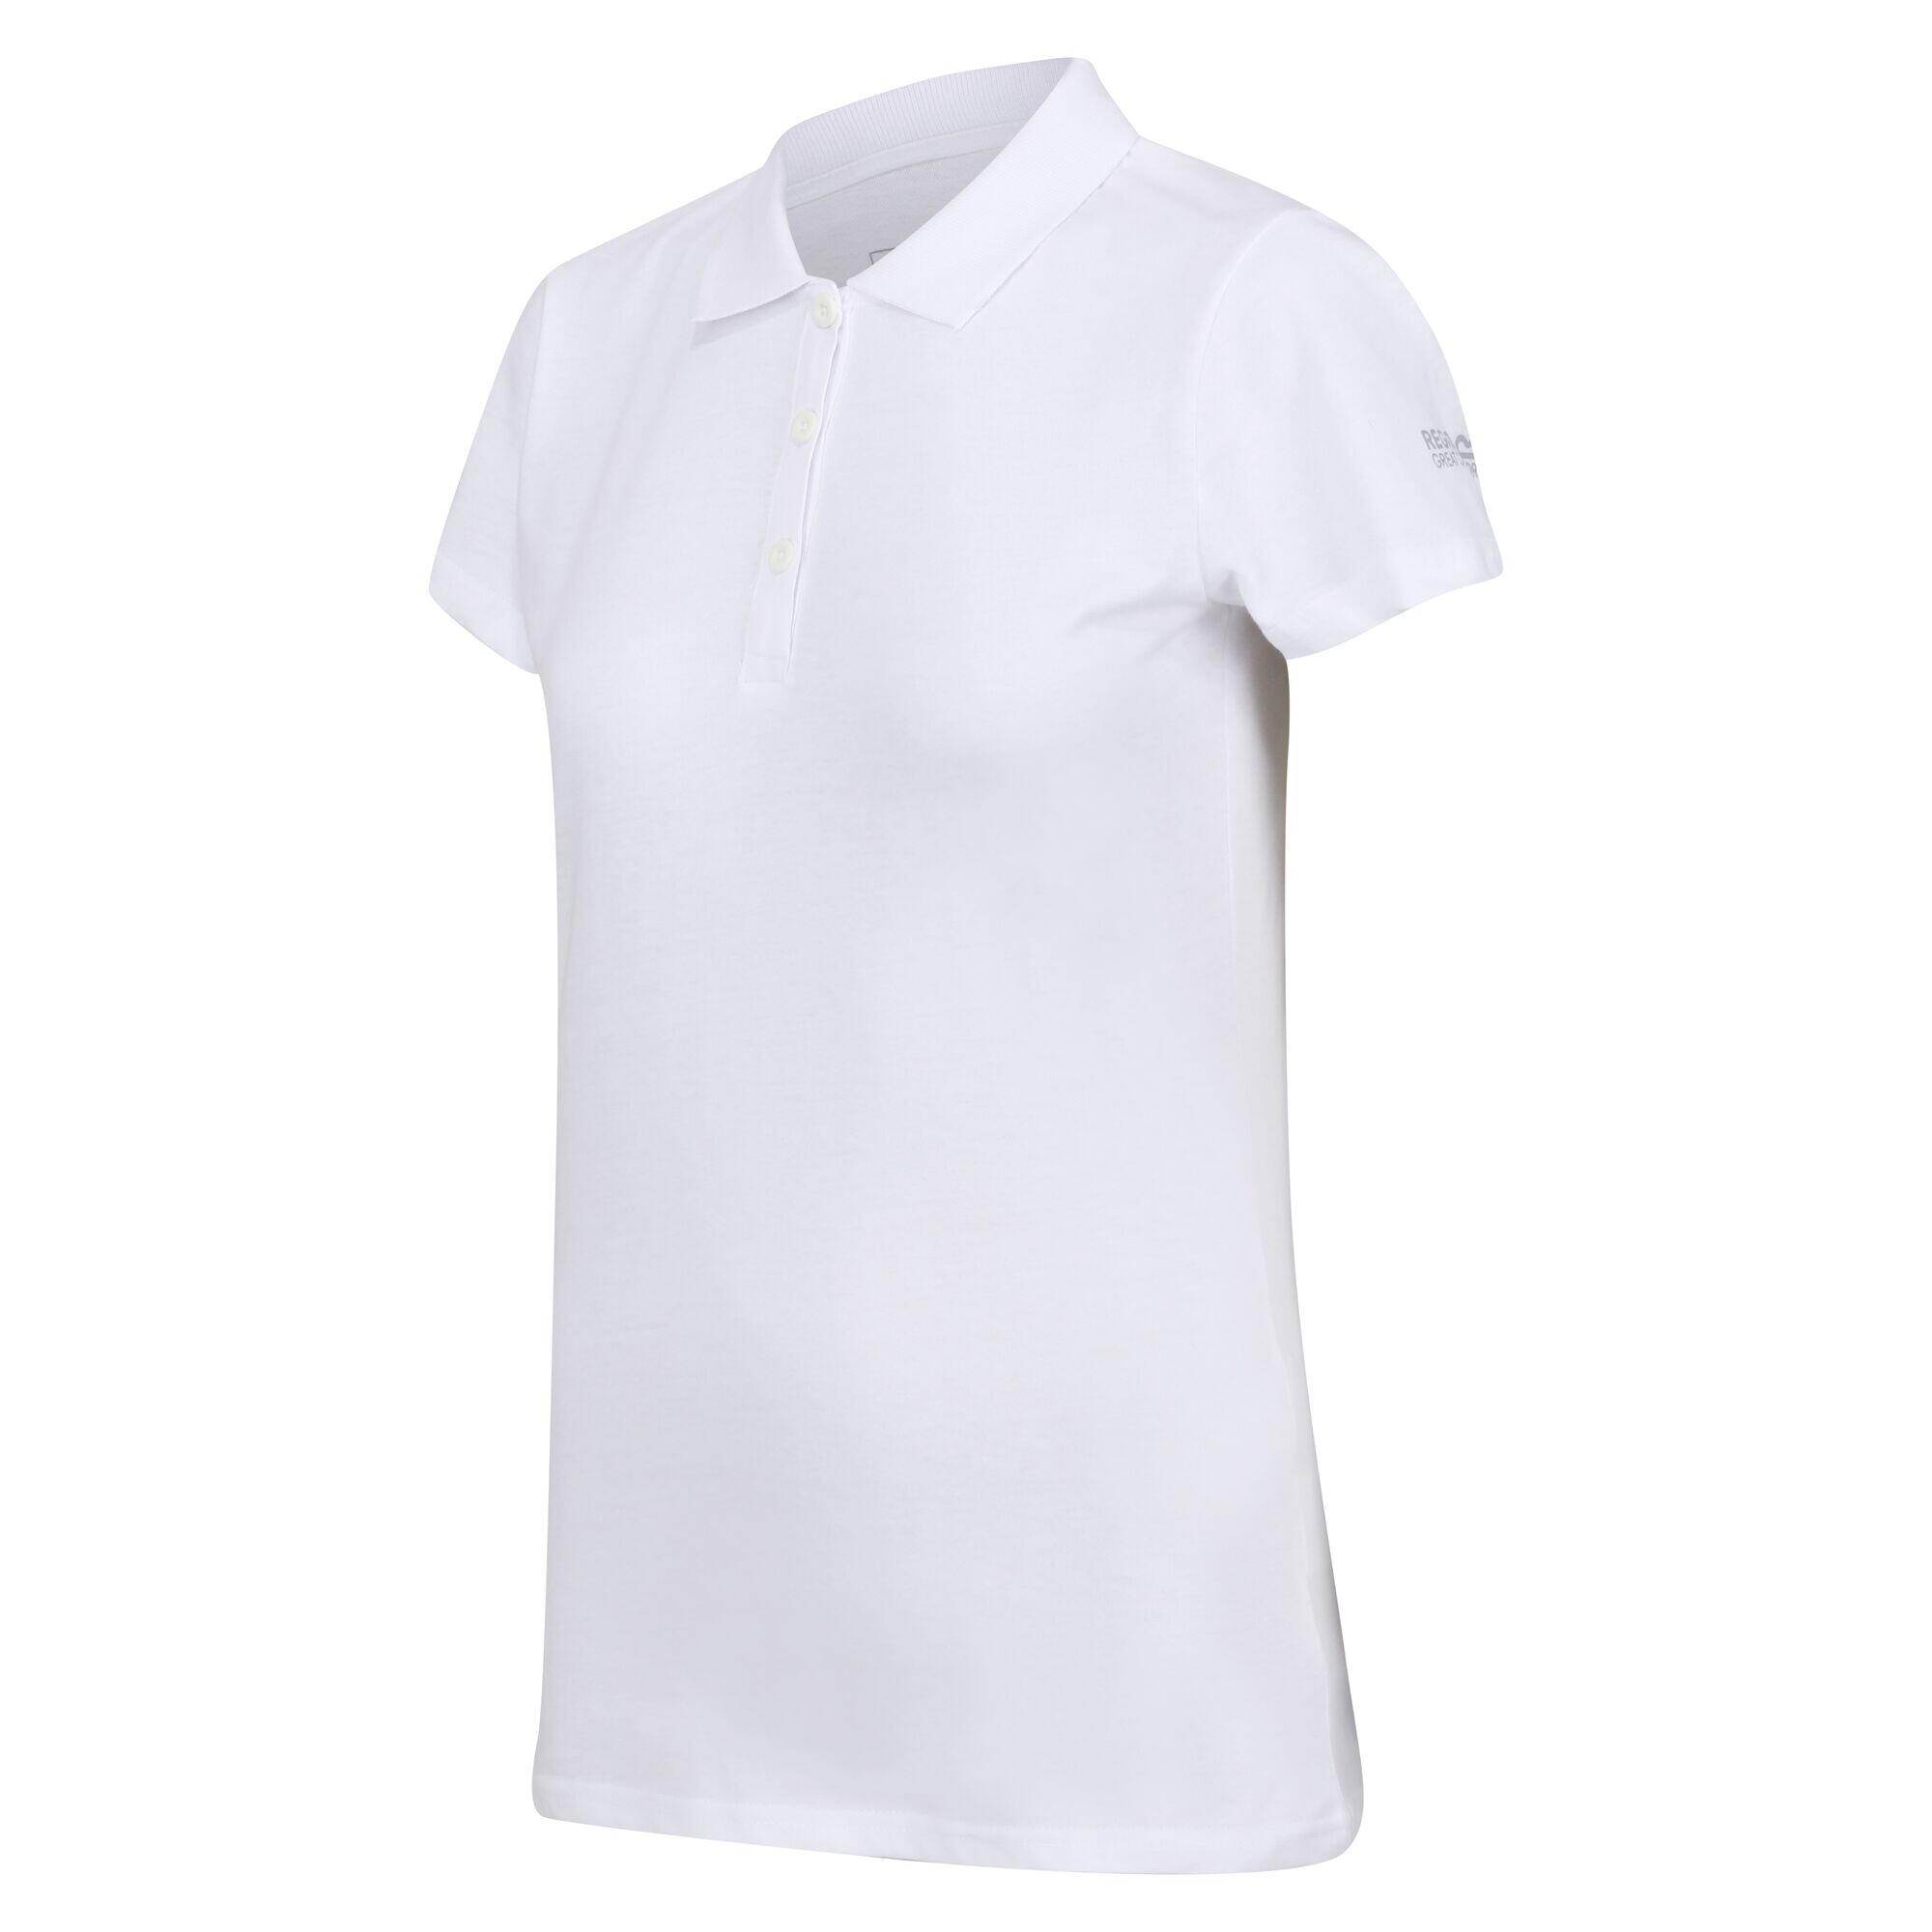 Sinton Women's Fitness T-Shirt - White 4/5